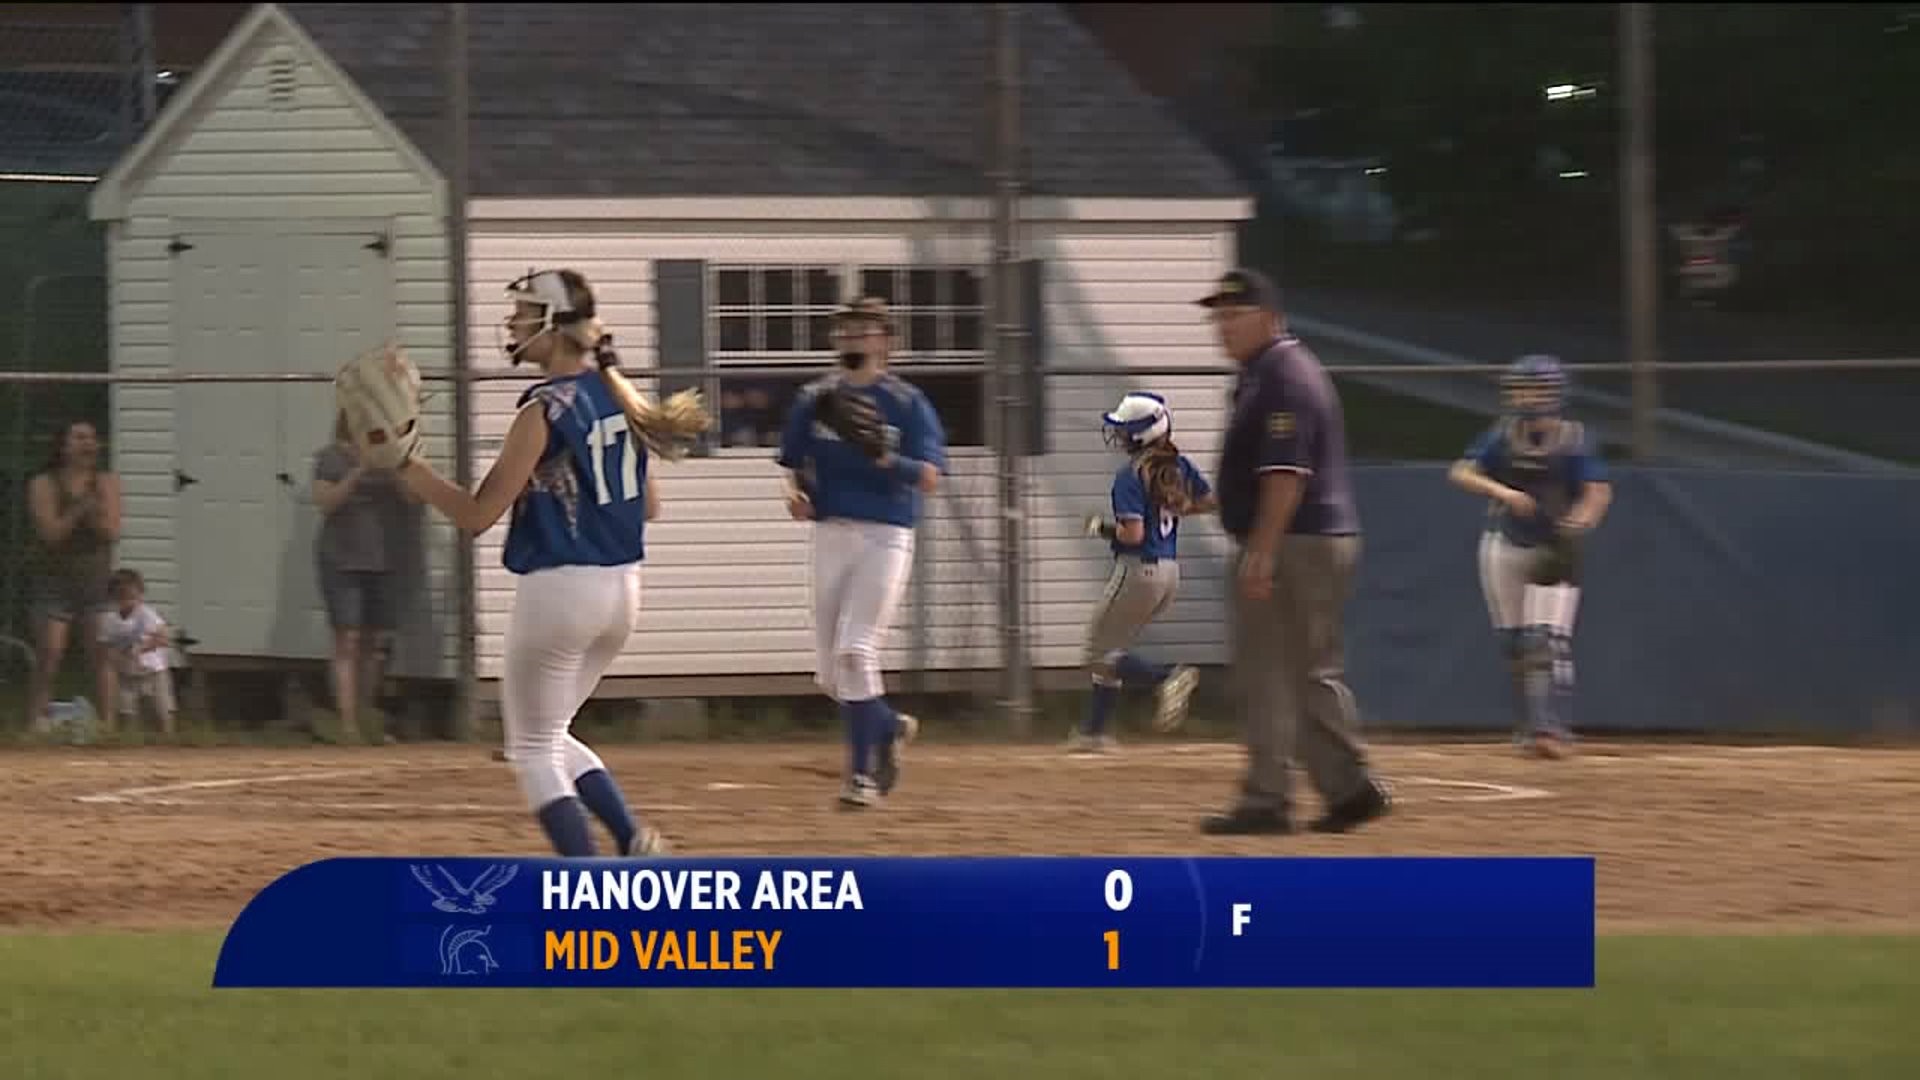 Hanover vs Mid Valley softball